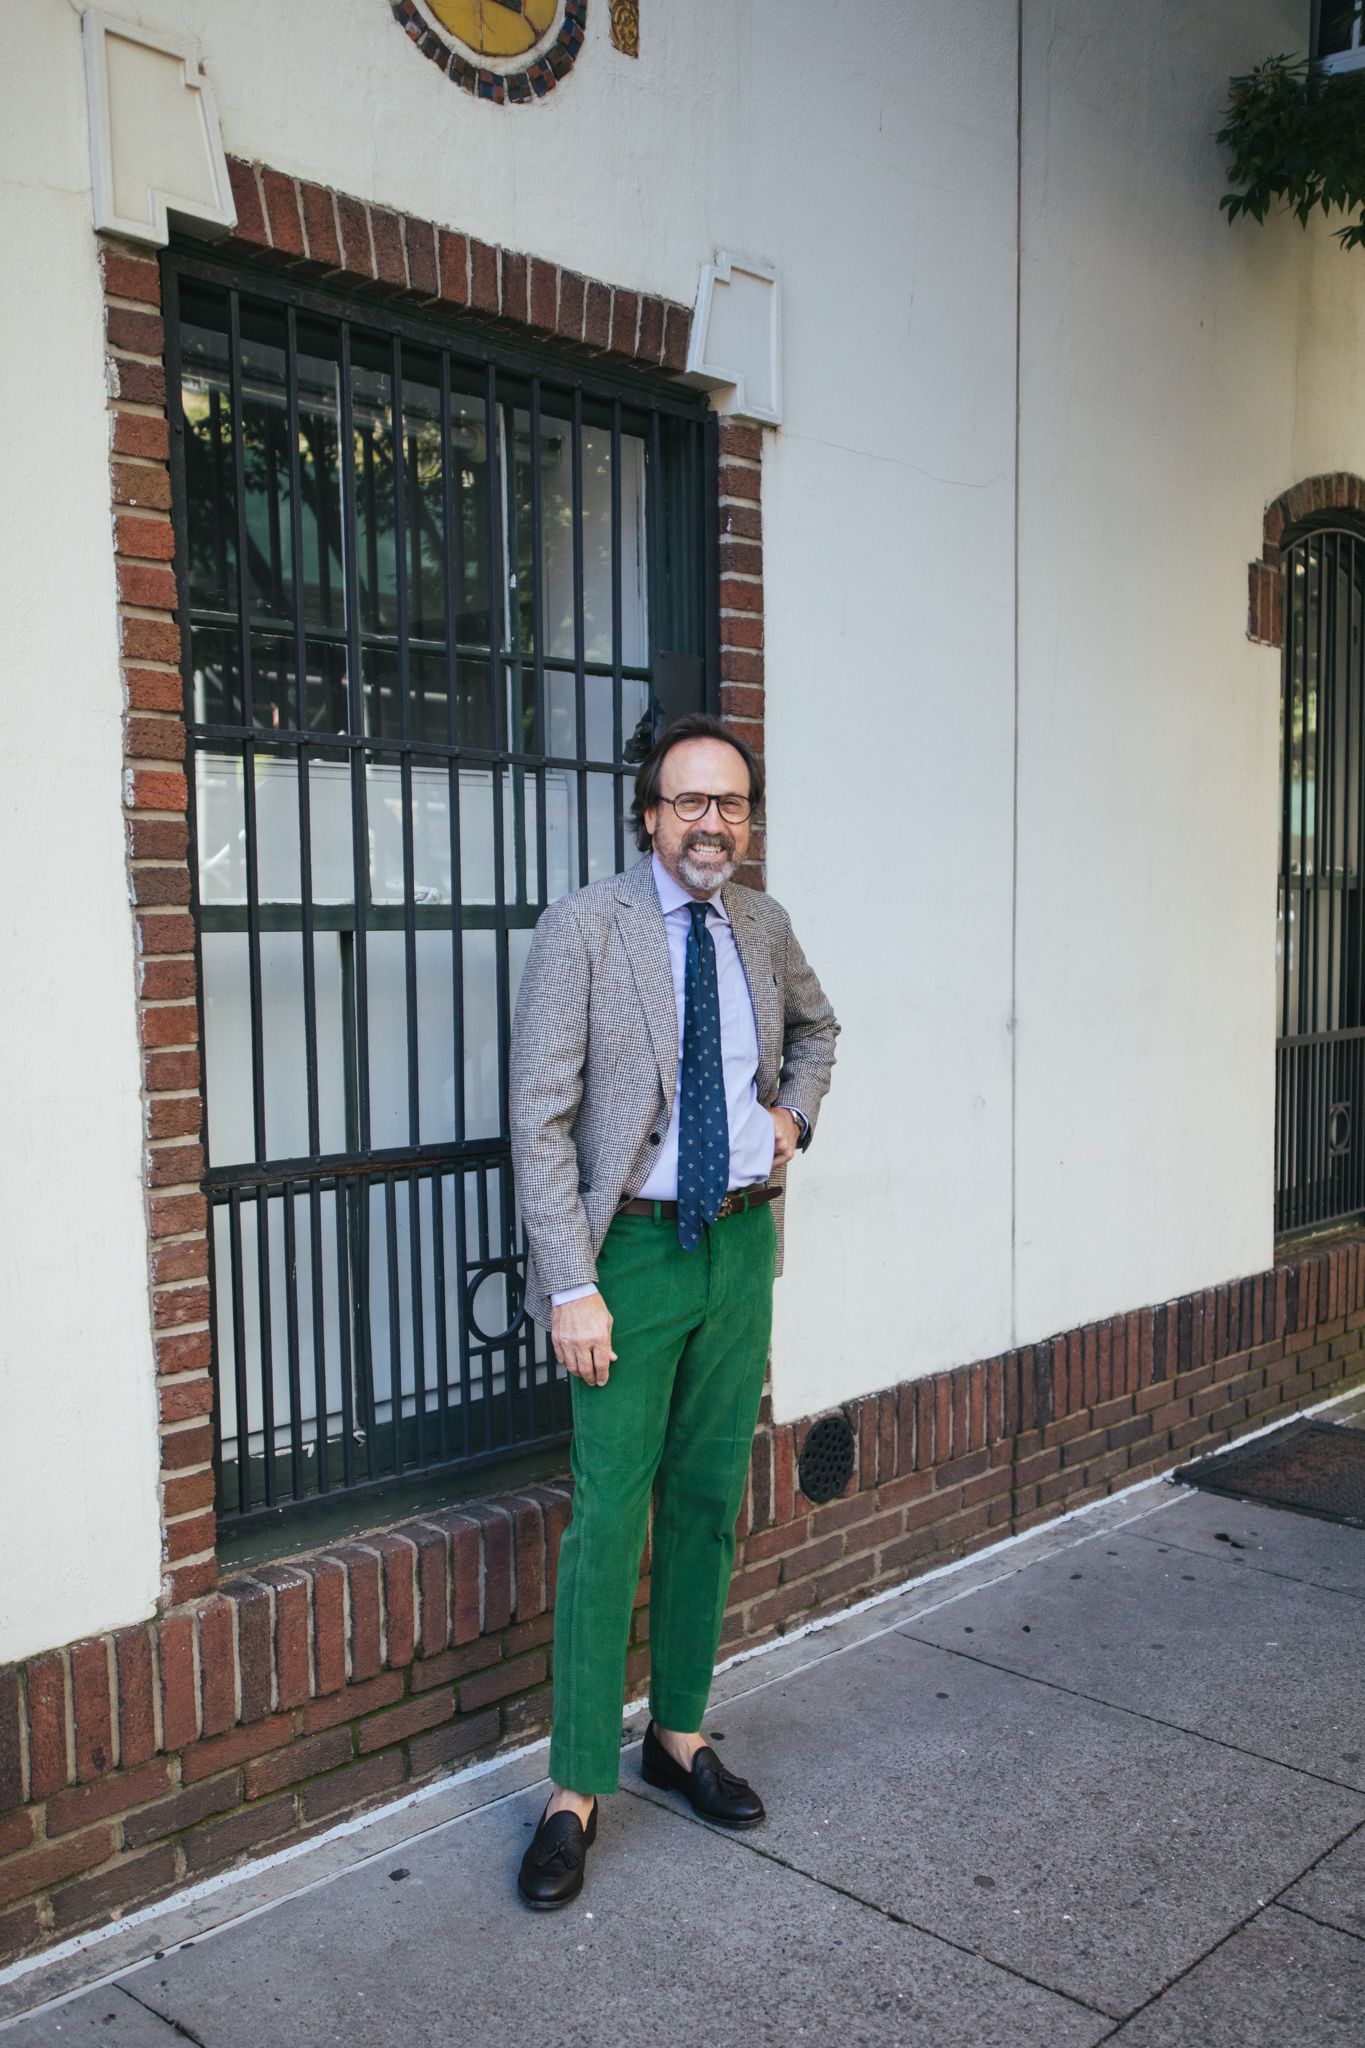 green pants with blue shirt. | Fashion, Green pants, Street fashion photos